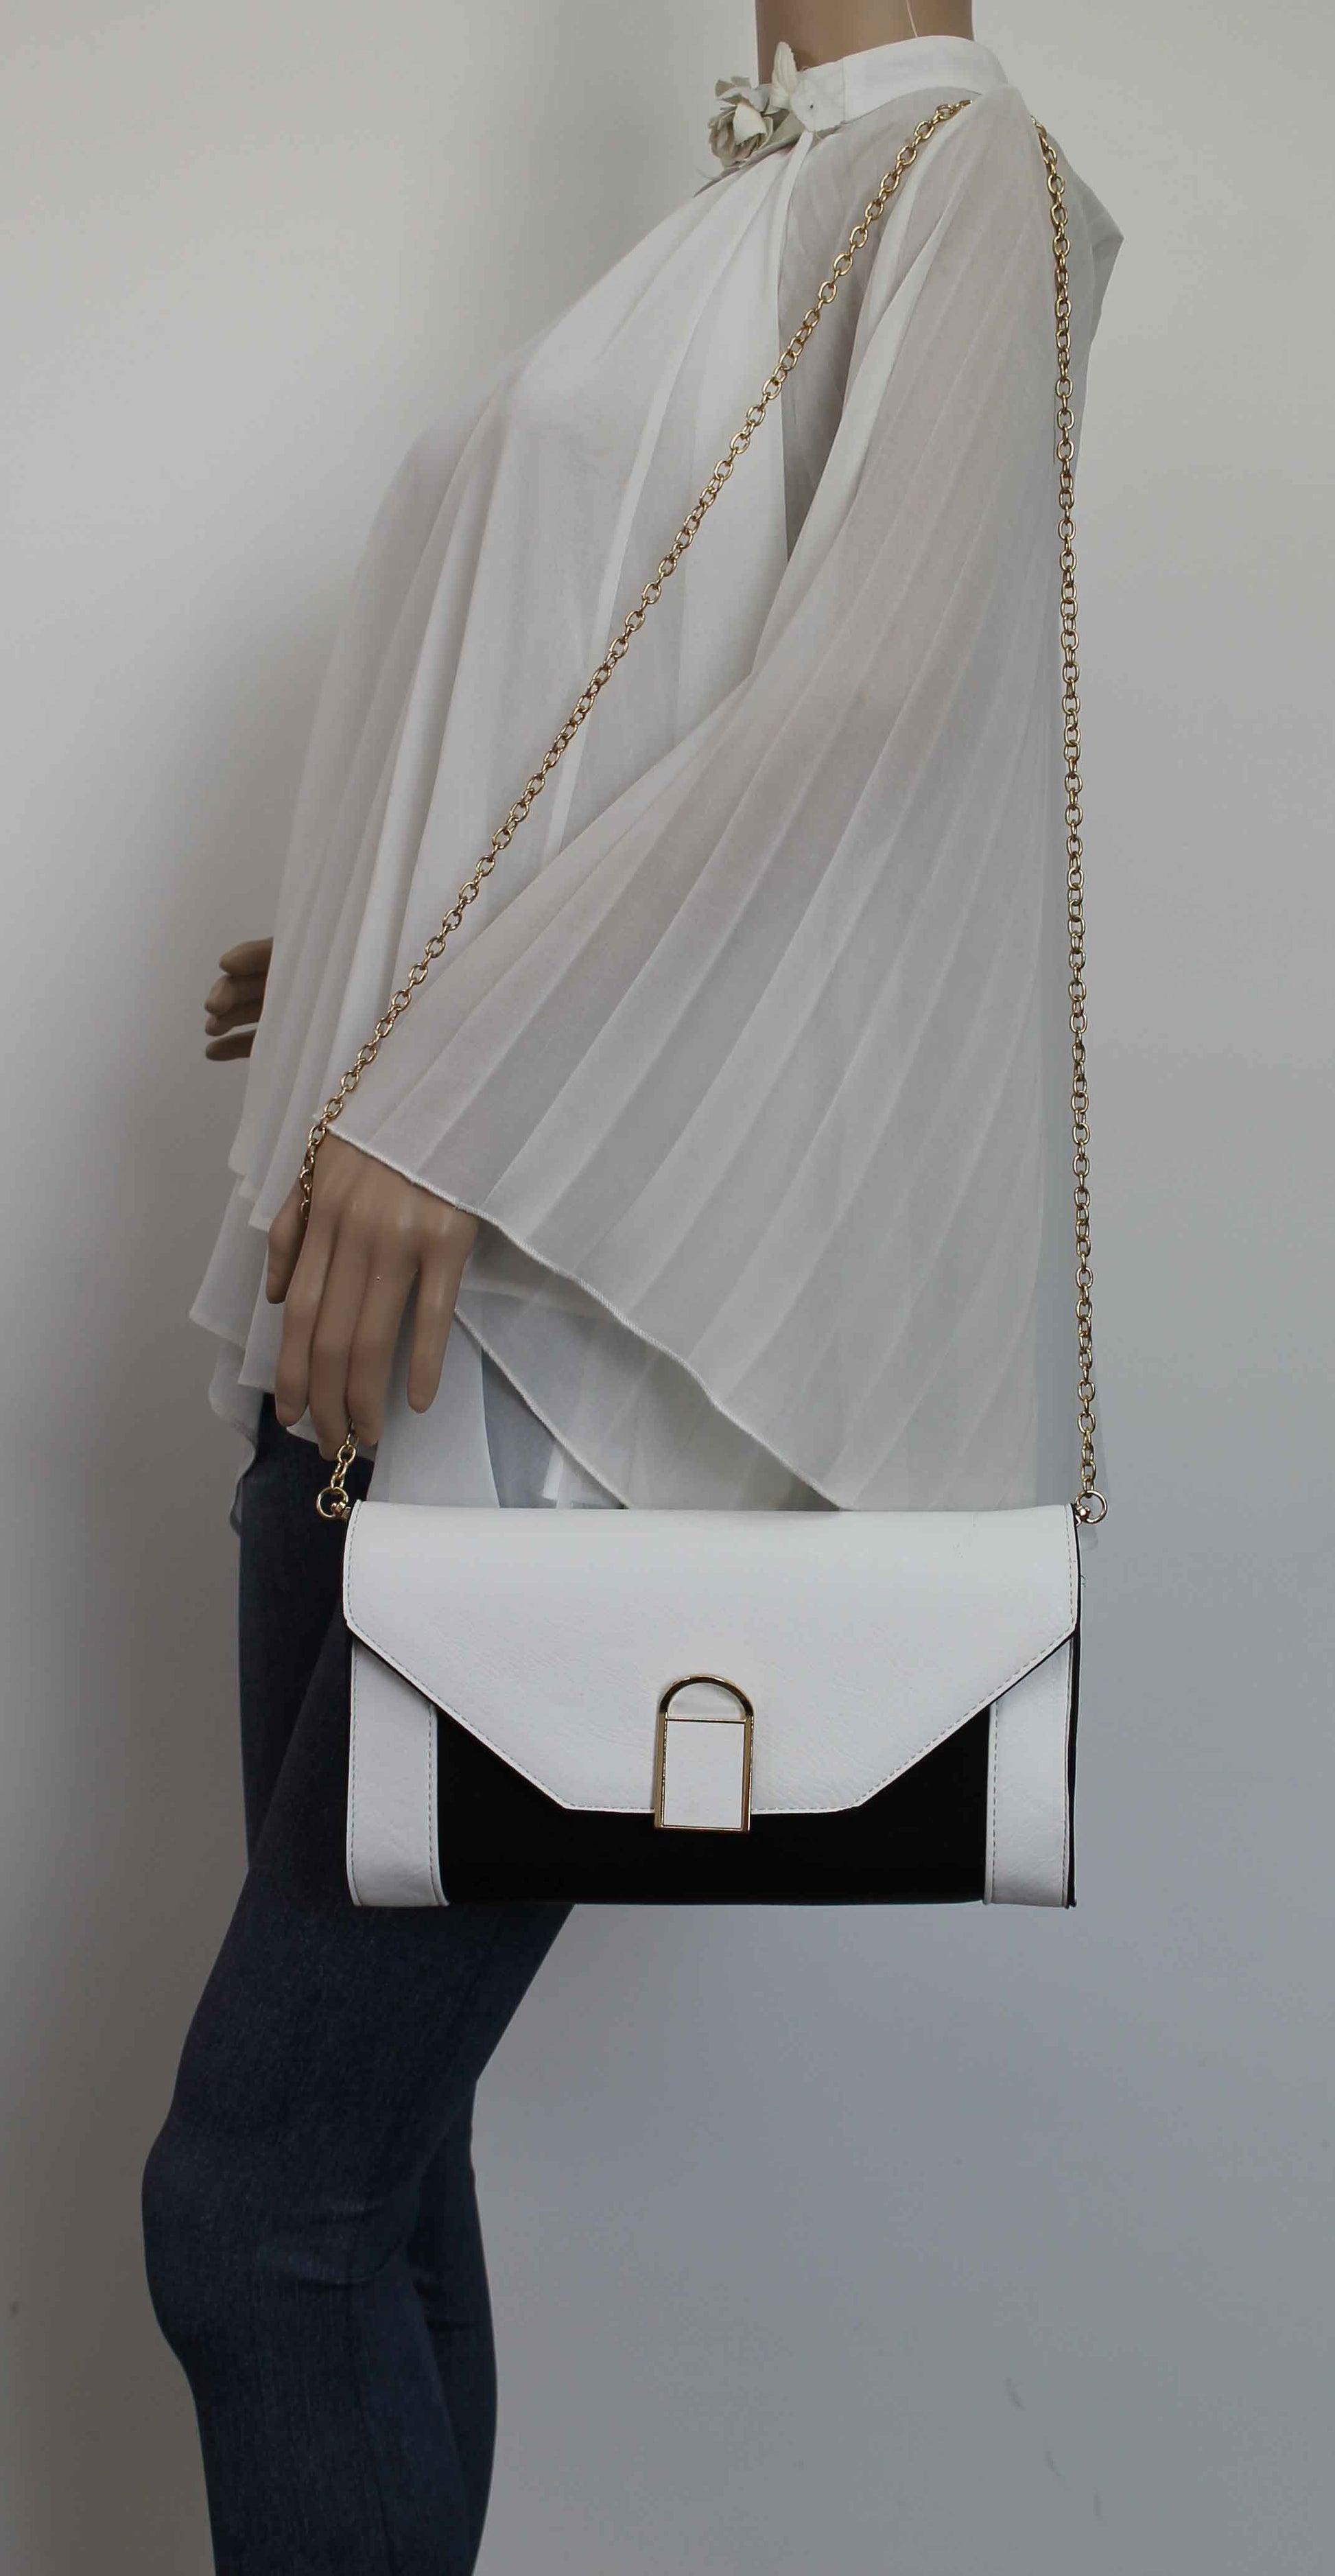 SWANKYSWANS Sydney Clutch Bag White Cute Cheap Clutch Bag For Weddings School and Work